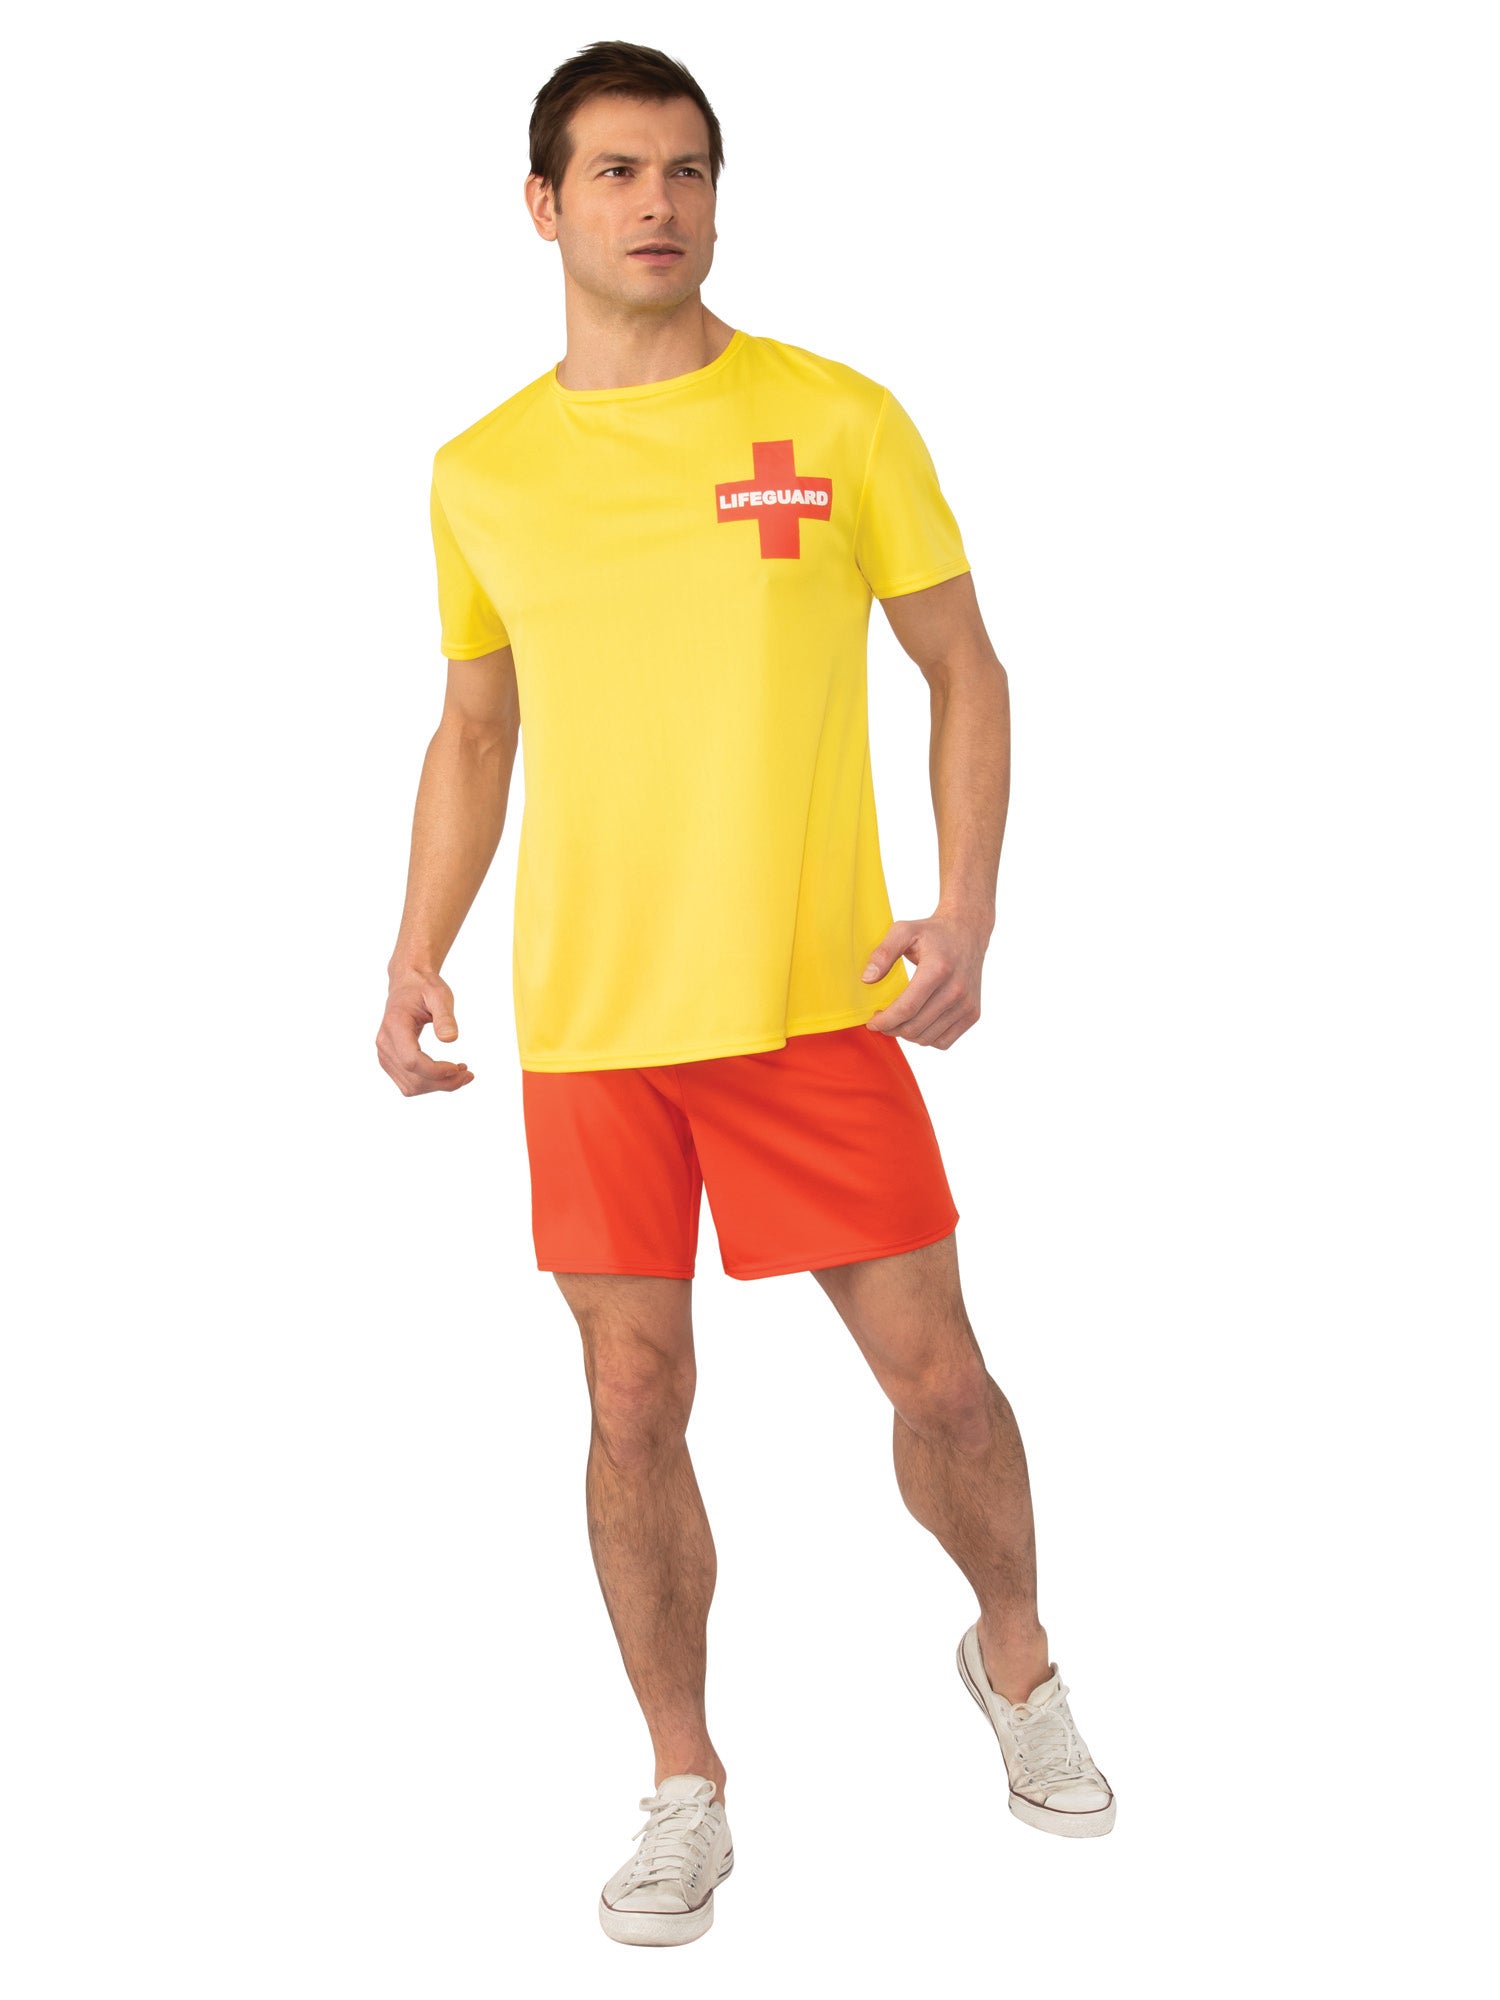 Lifeguard, Multi, Generic, Adult Costume, Standard, Front